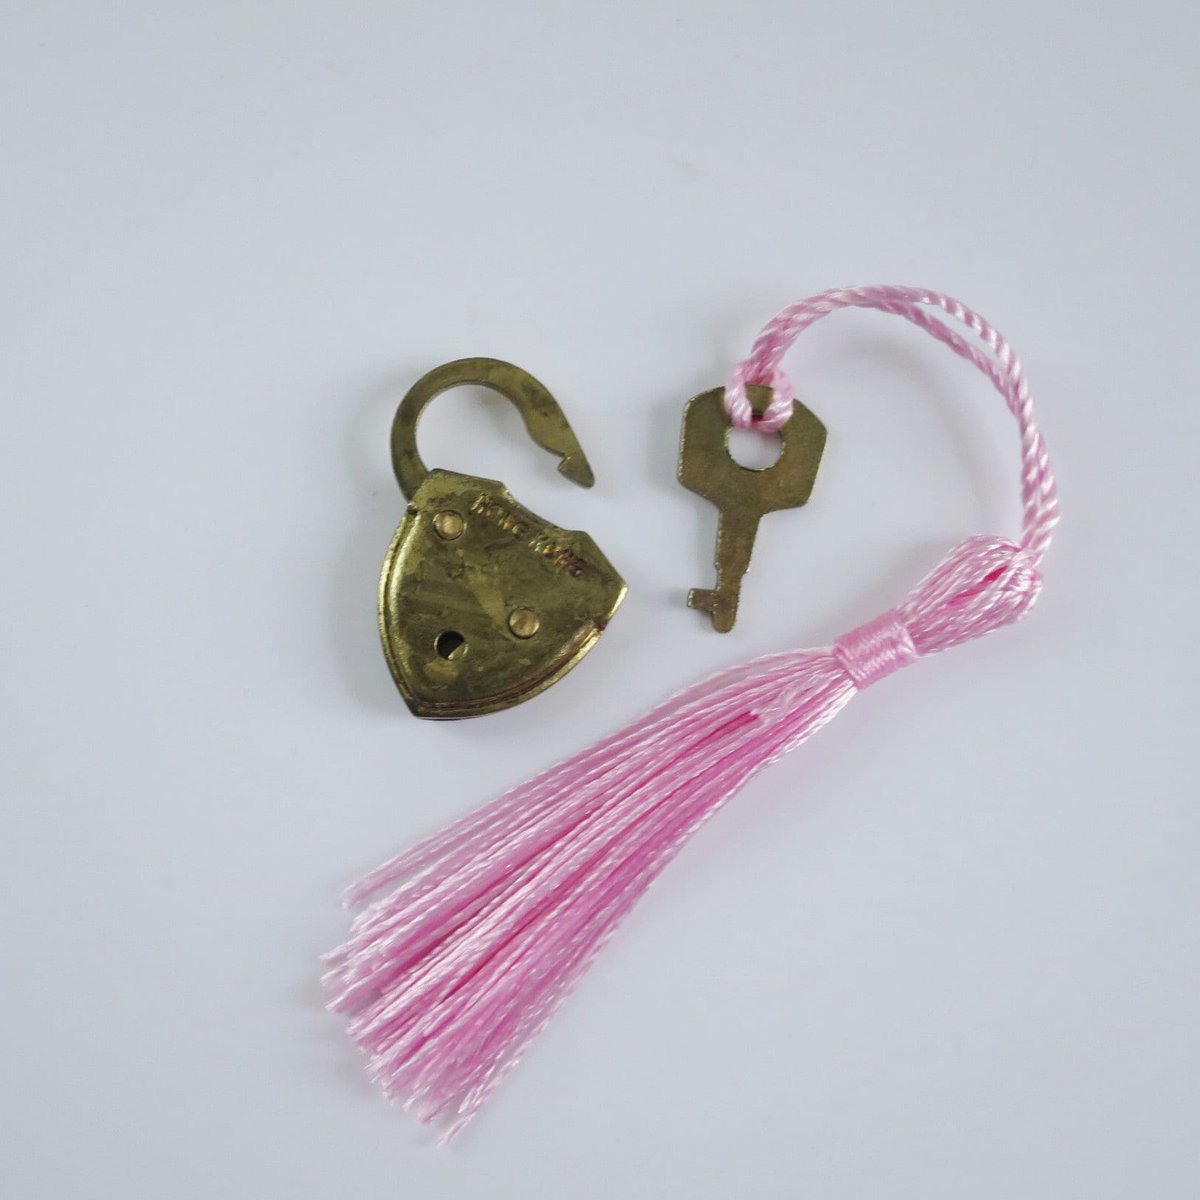 Vintage Heart Lock & Key Charm Pendant Set, Mini Padlock and Key, Maid of Honor BFF Gift tuppu.net/2a46d3c6 #SMILEtt23 #EtsyteamUnity #SwirlingO11 #Vintage4Sale